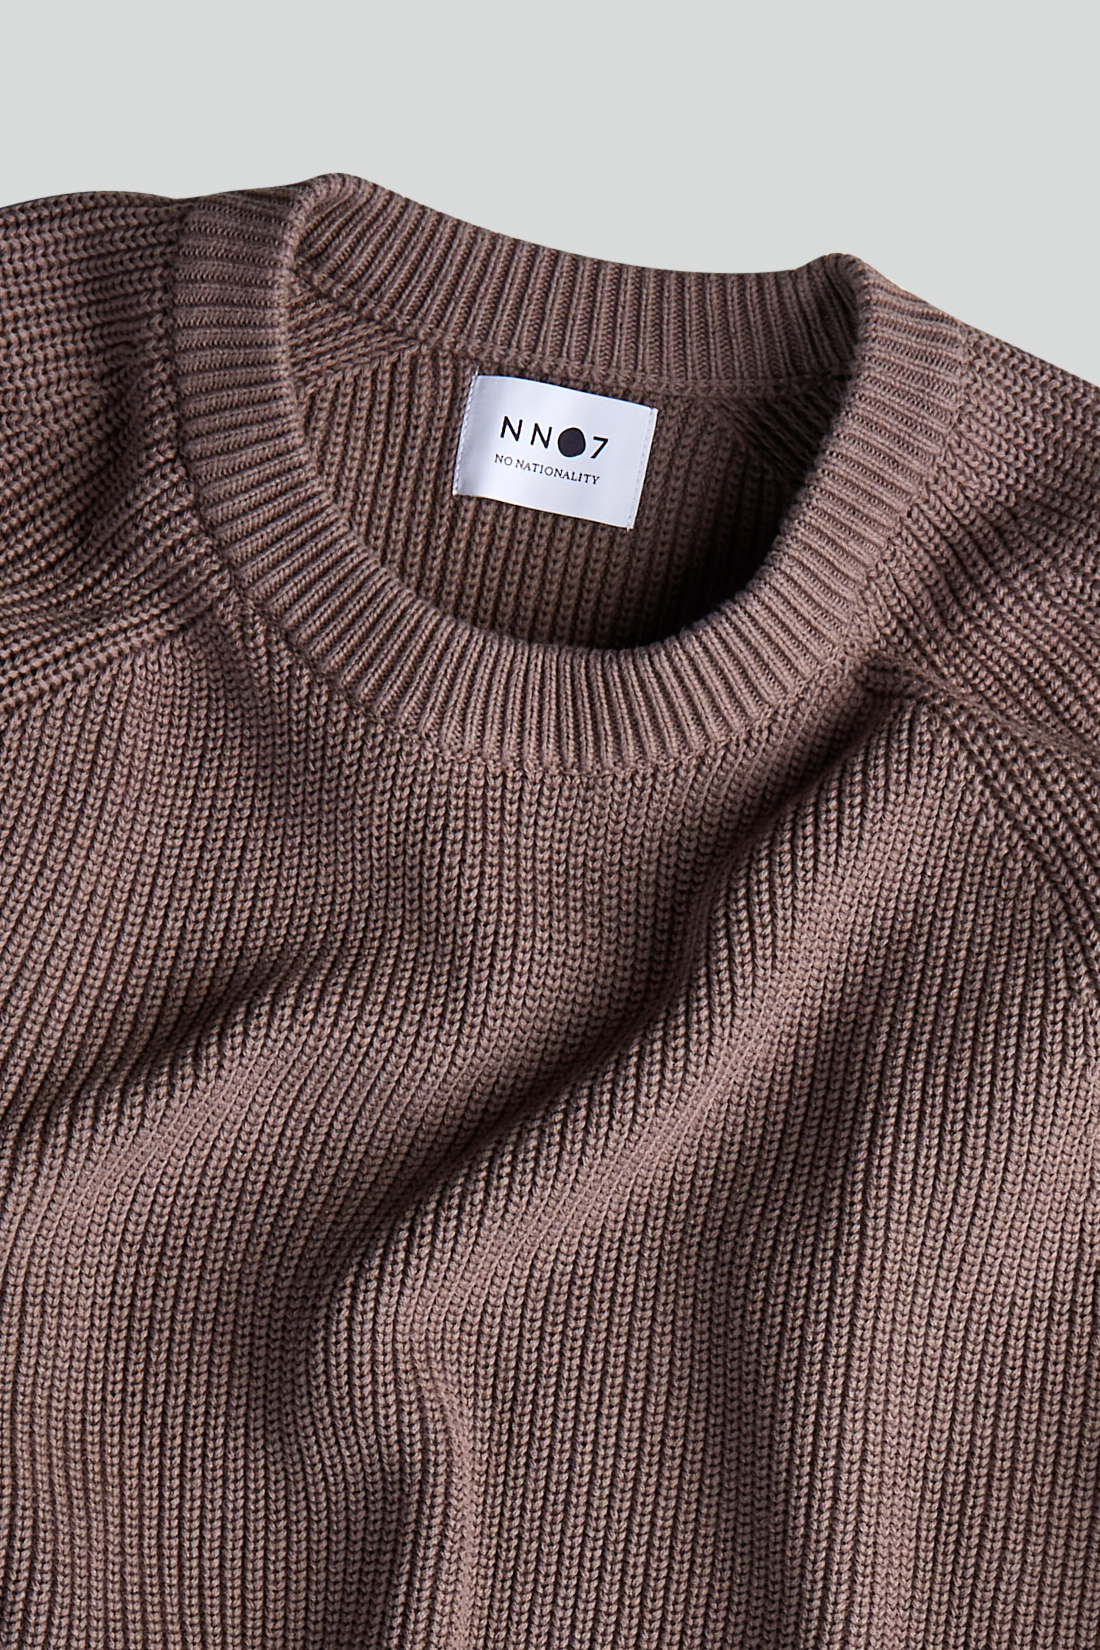 Jacobo men's sweater - Grey - online at NN.07®